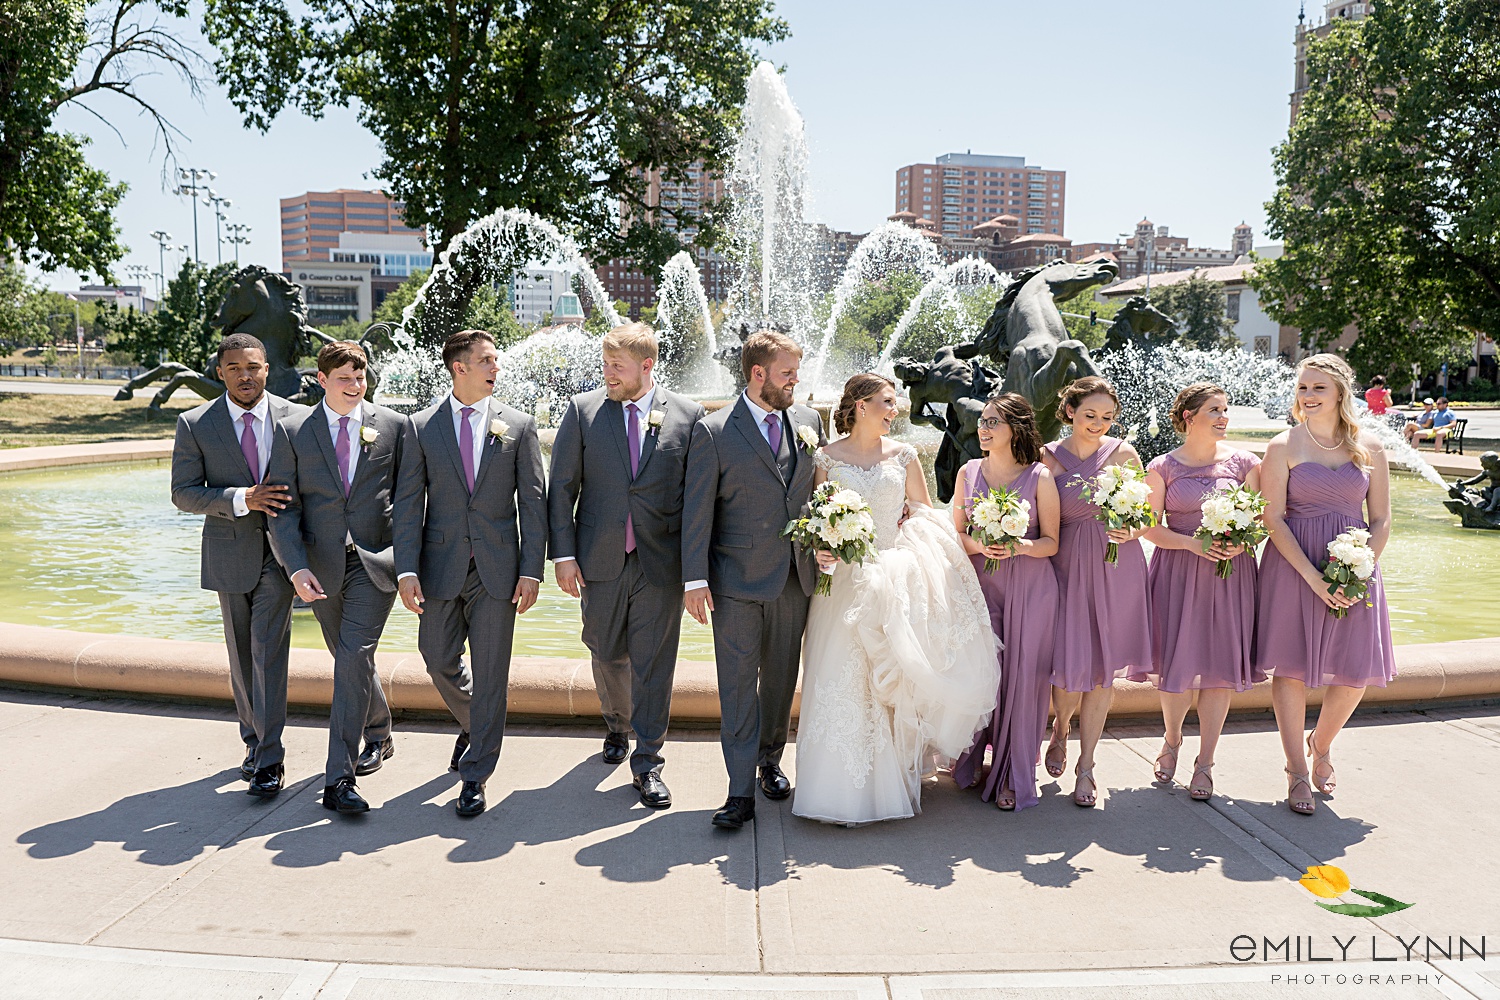 Wedding-Party-Photos-Plaza-Wedding-Photos-at-the-Fountain-Emily-Lynn-Photography_0072